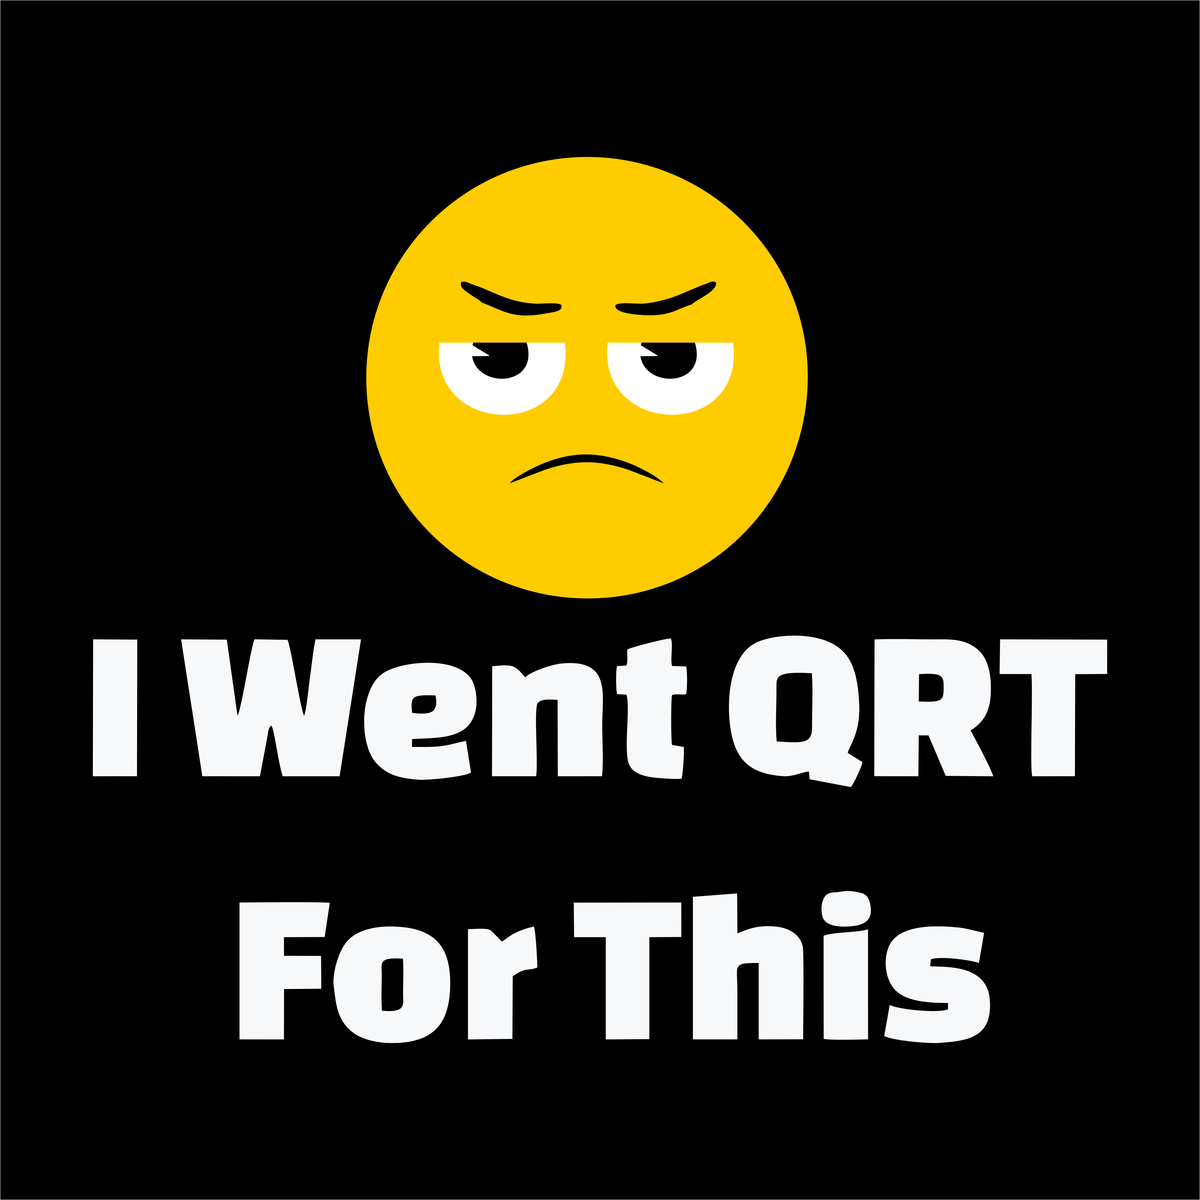 I went QRT for this - Ham Radio T-shirt